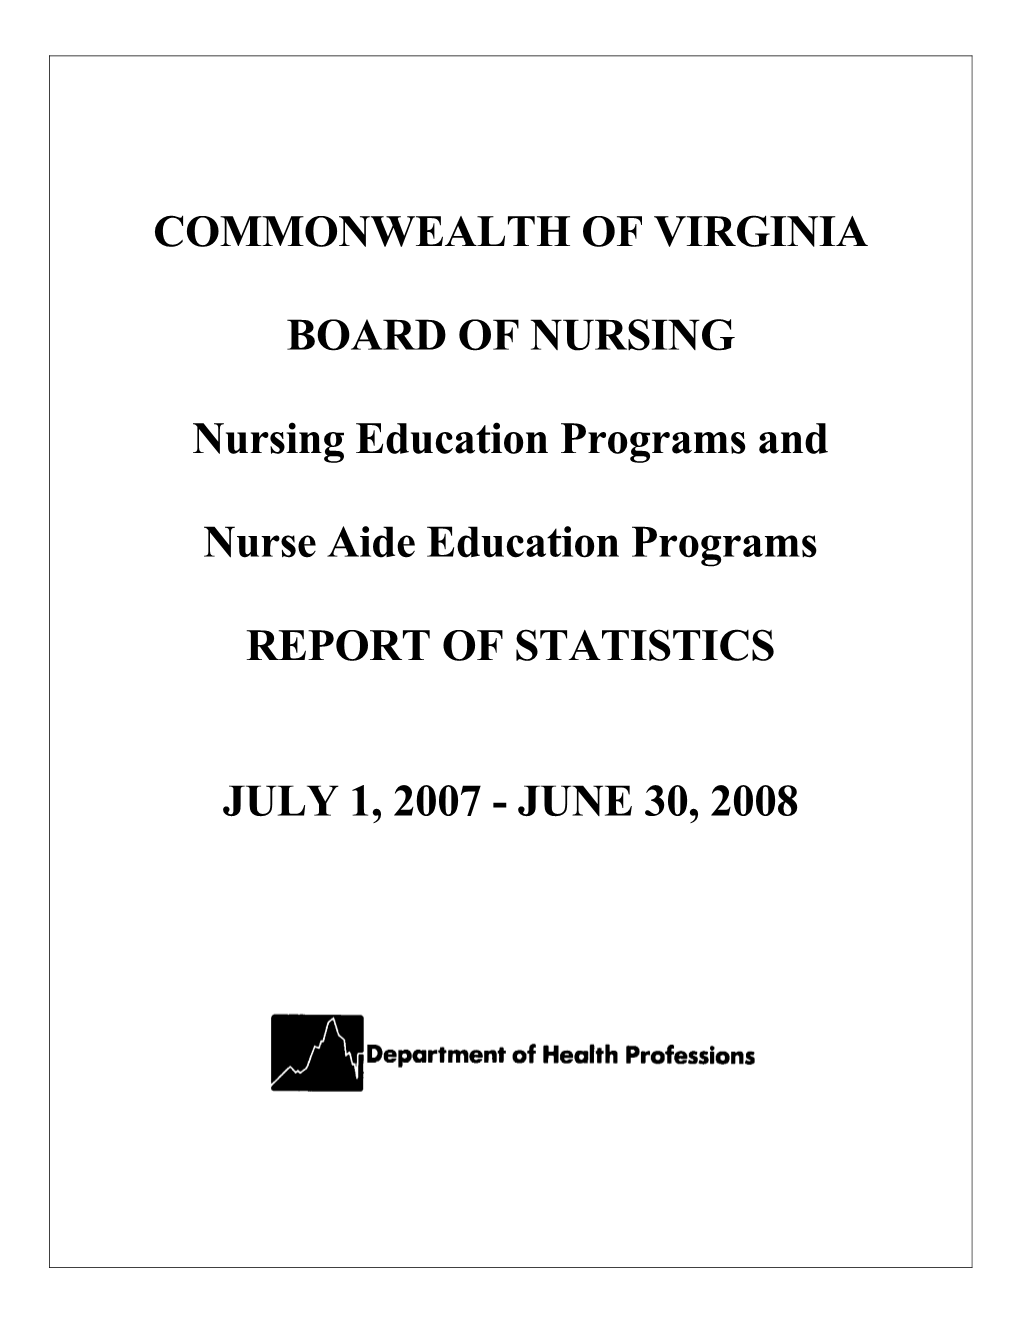 Nursing Report of Statistics 2007-2008